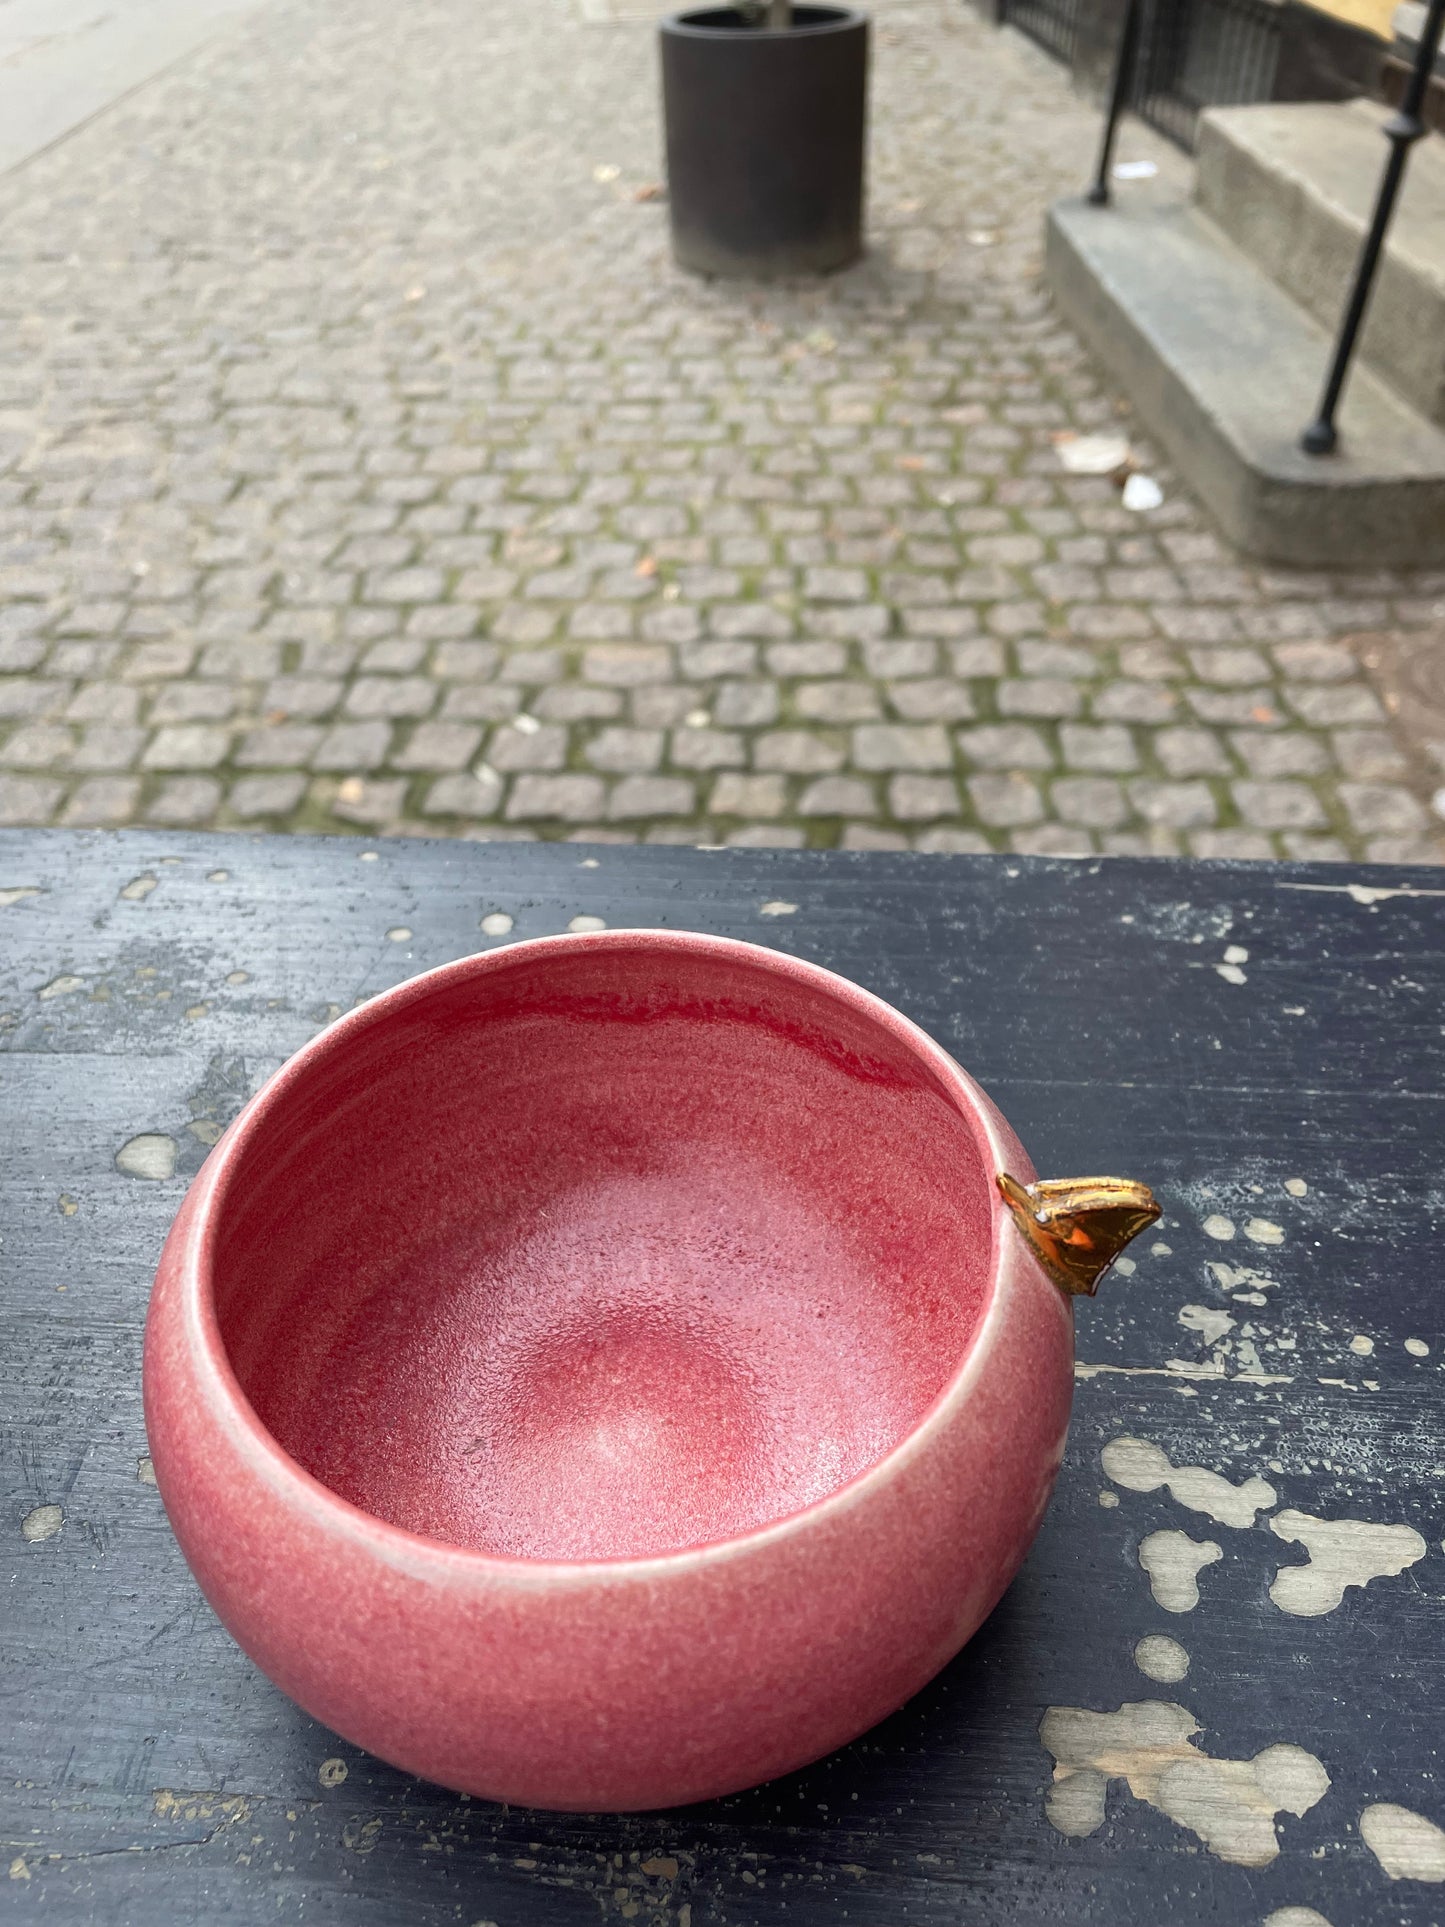 Håndlavede keramik krukker - Farve: Mørk Rosa med Guldsommerfugl